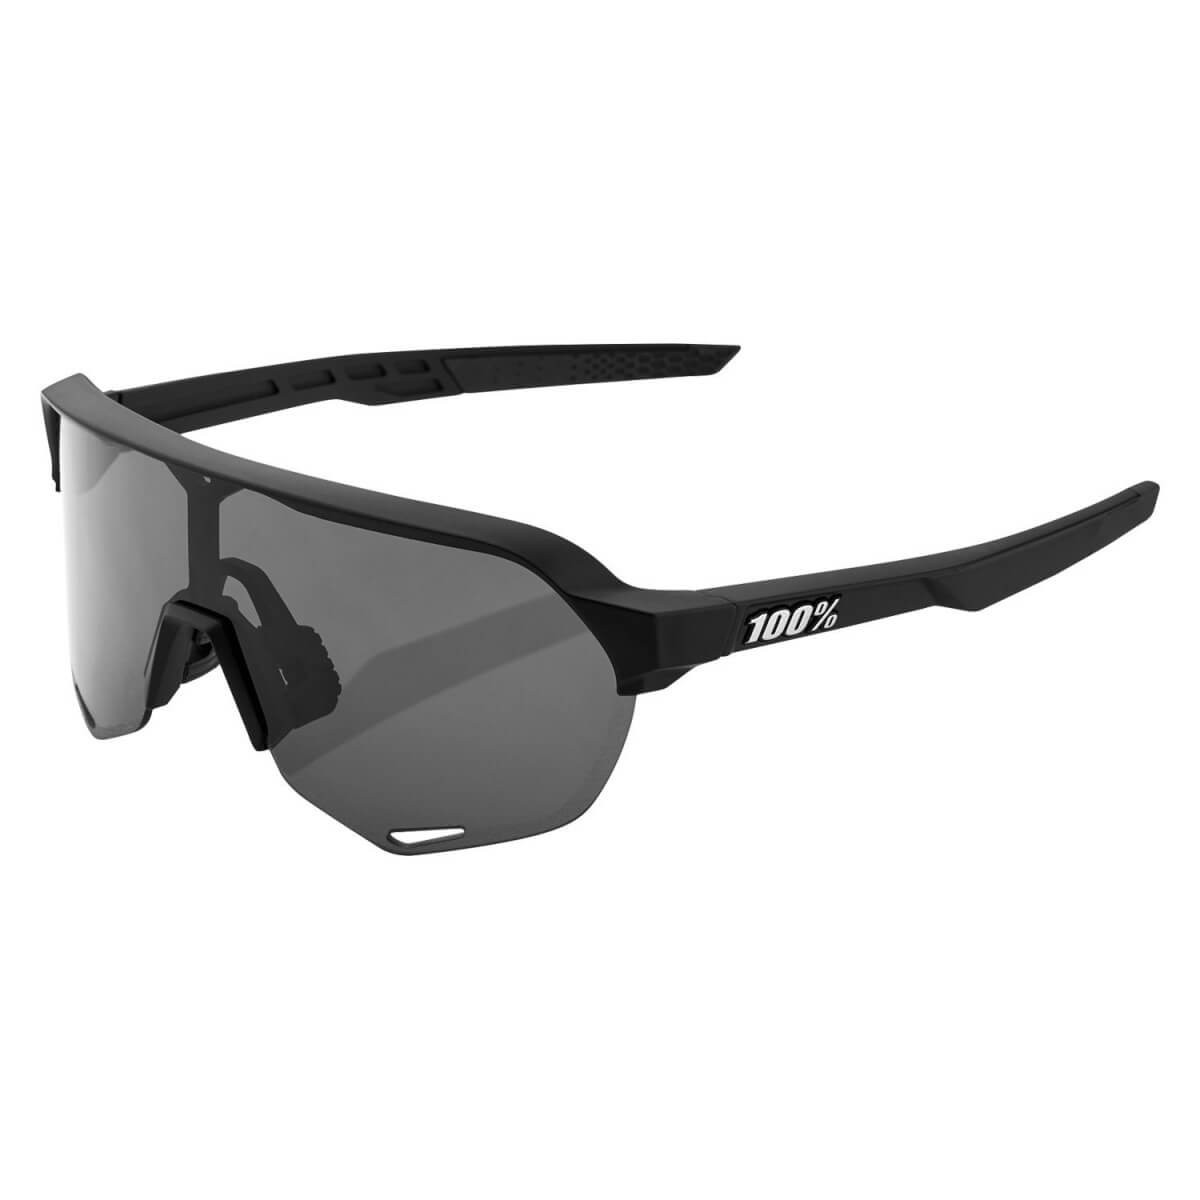 Photos - Sunglasses Glasses 100 S2 Black Smoked Lens 61003-100-57